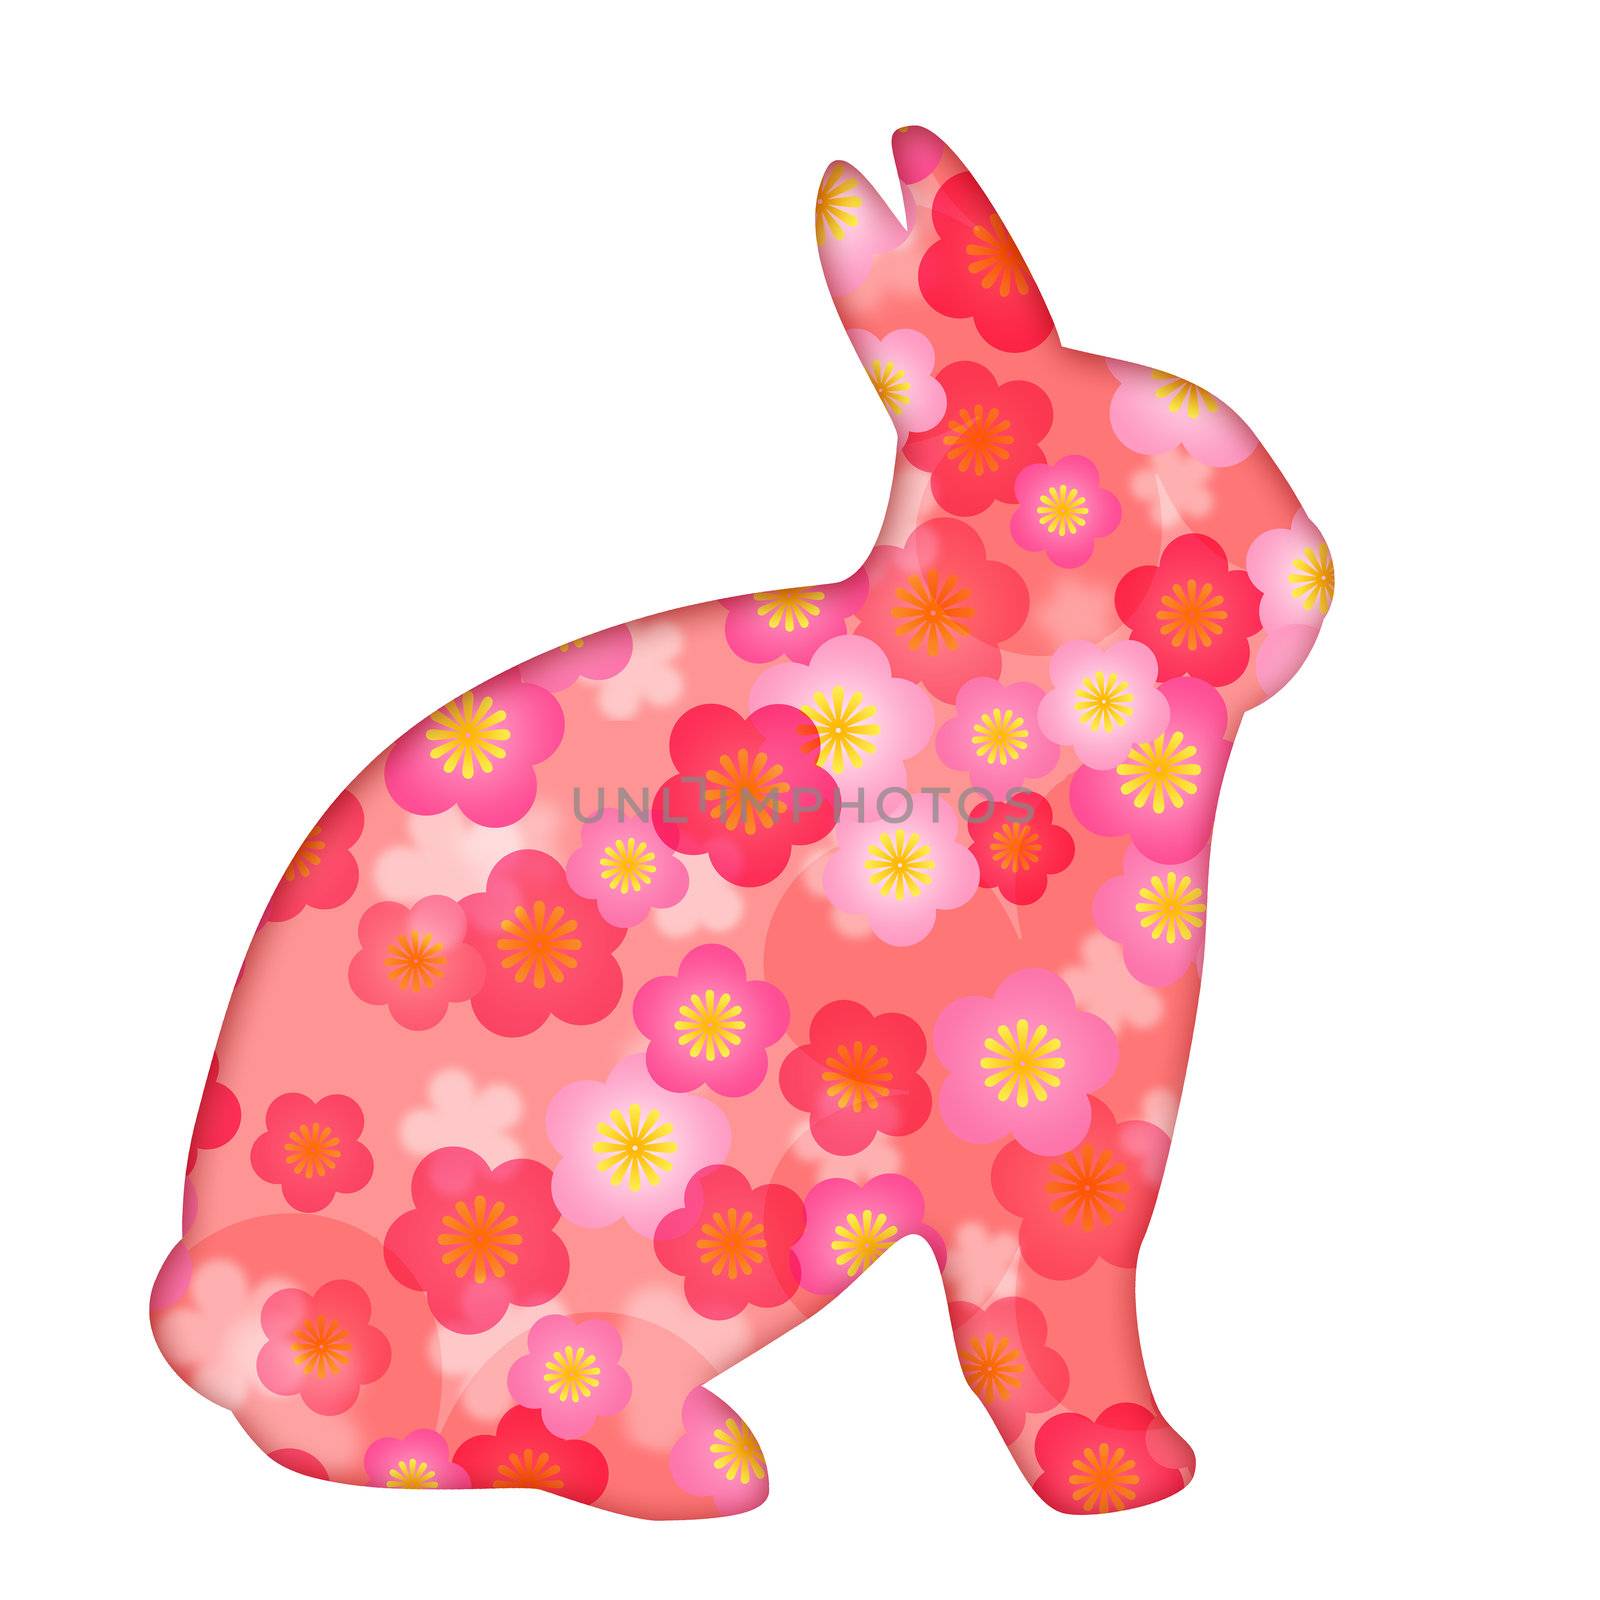 Spring Cherry Flowers Blossom Bunny Rabbit Illustration by jpldesigns